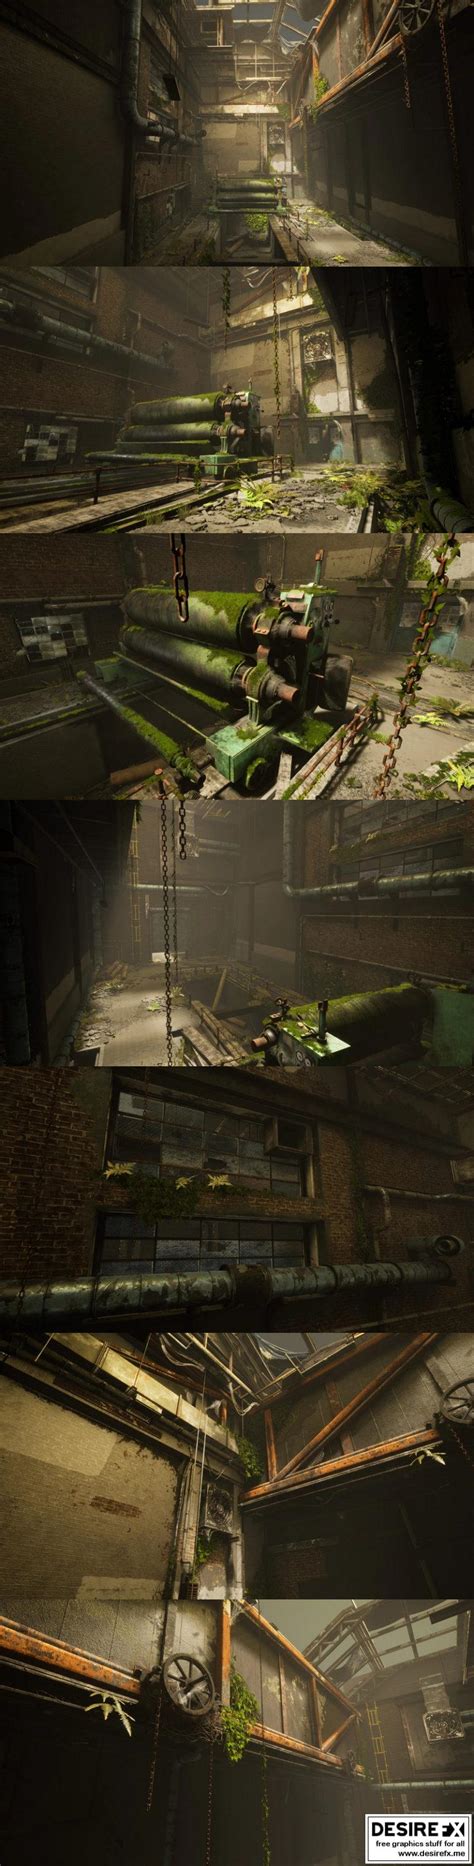 Desire FX 3d Models Abandoned Factory